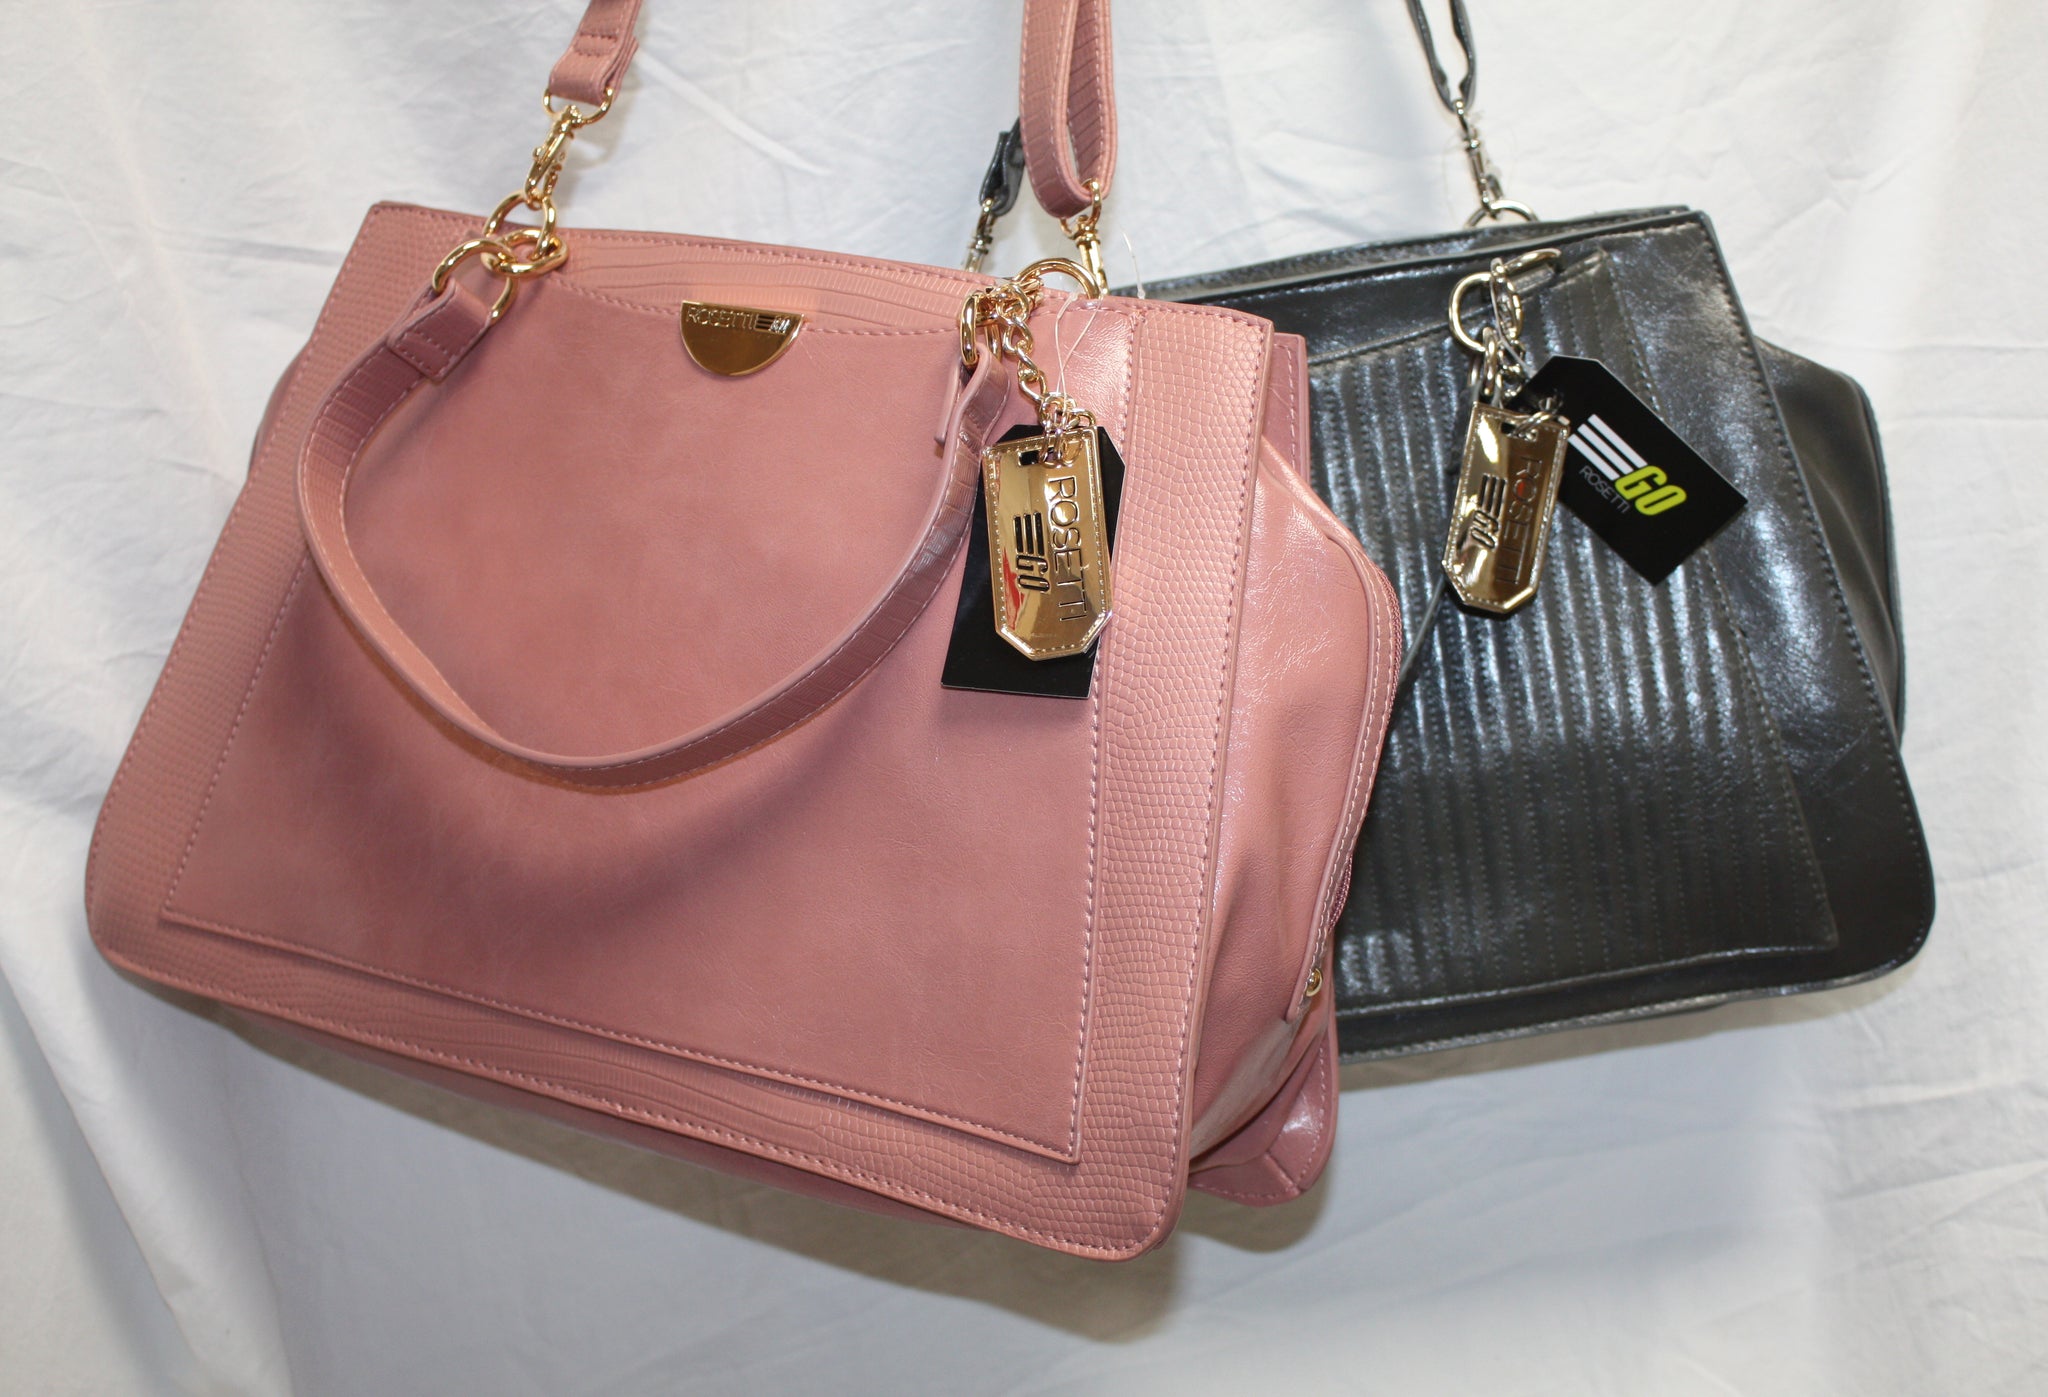 Shop Online for Designer Handbags at Deep Discounts